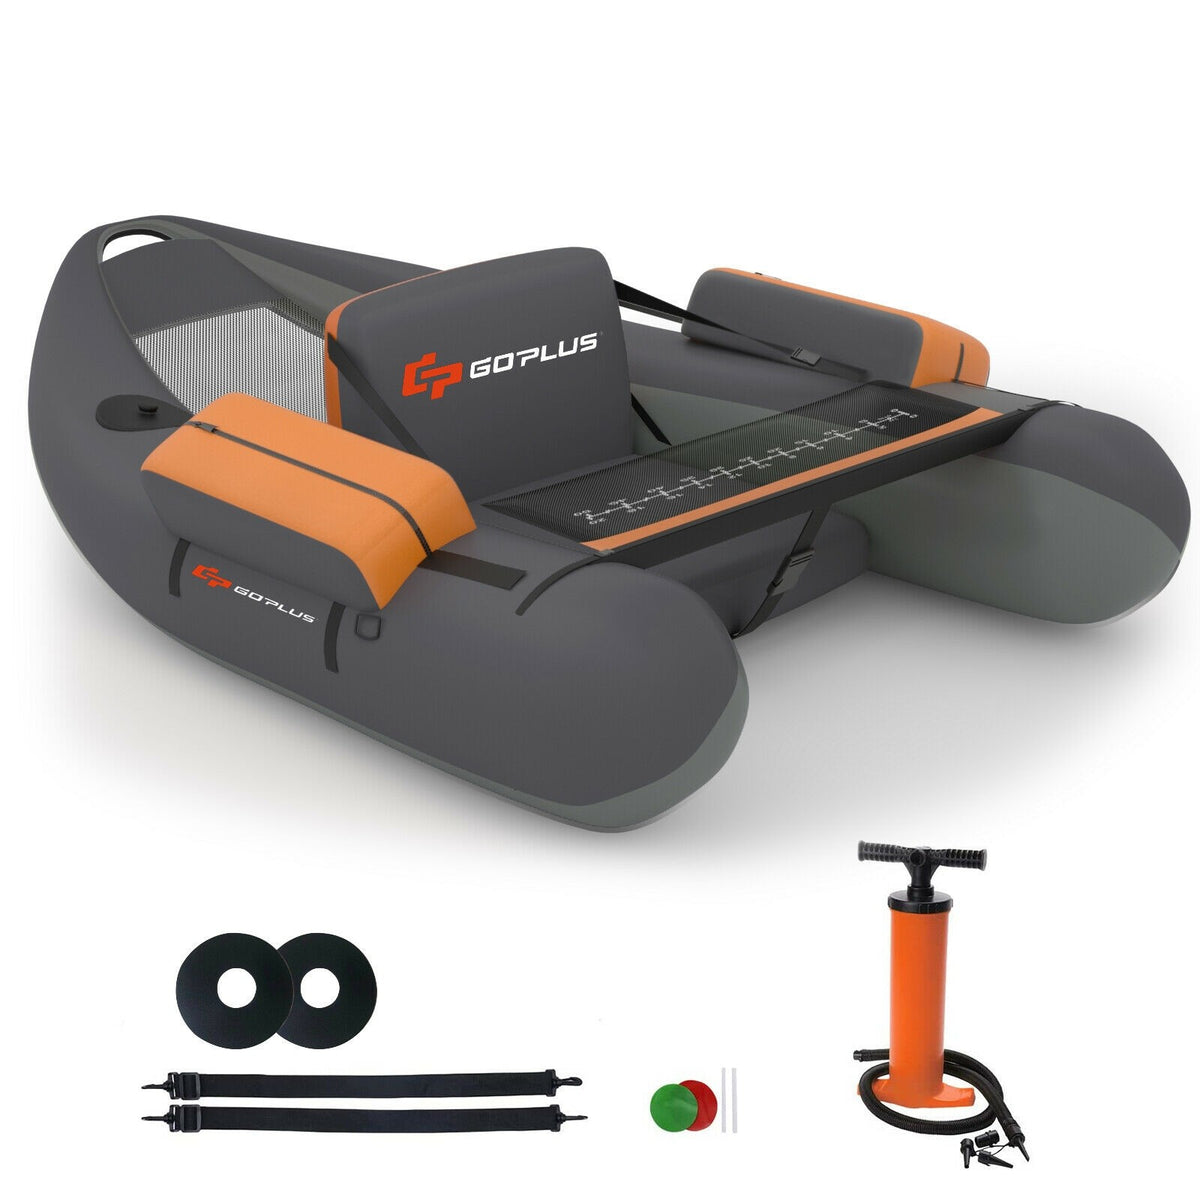 SilverCrate+™ Inflatable Fishing Tube (350lbs cap.) – SilverCrate Plus